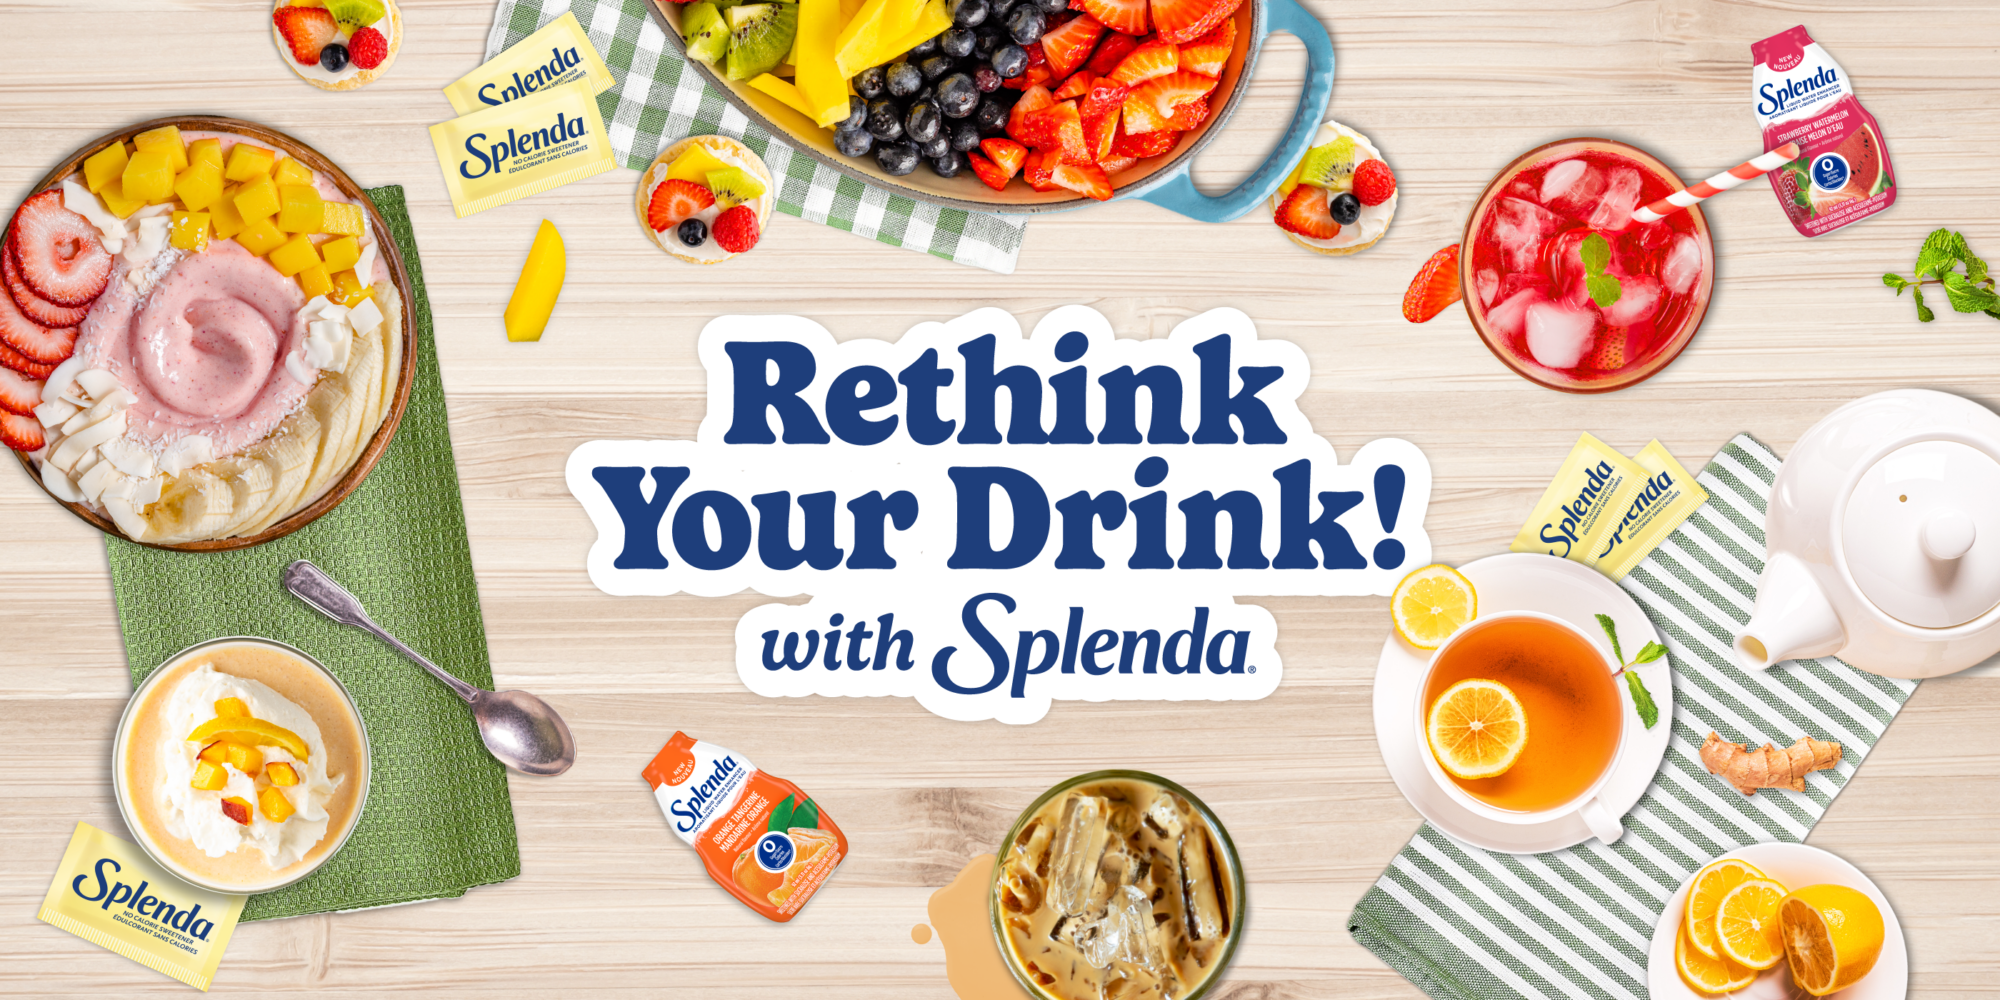 Rethink Your Drink with Splenda